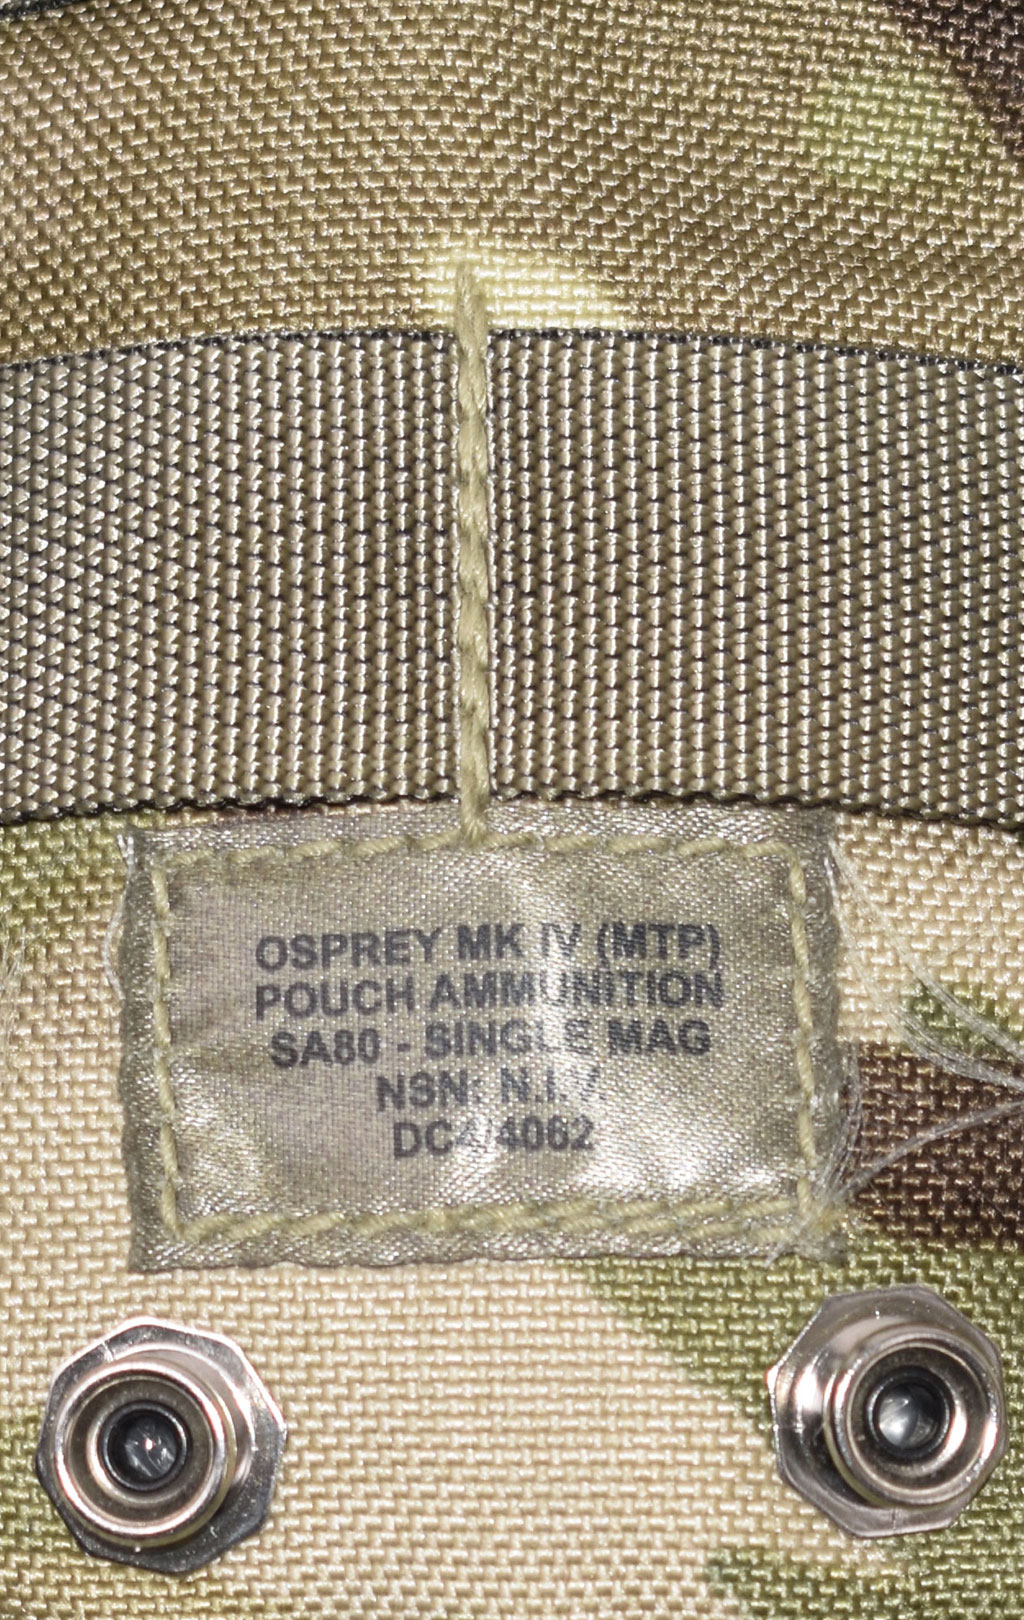 Подсумок магазинный SA80 Osprey MK IV single mag(липучка) mtp Англия